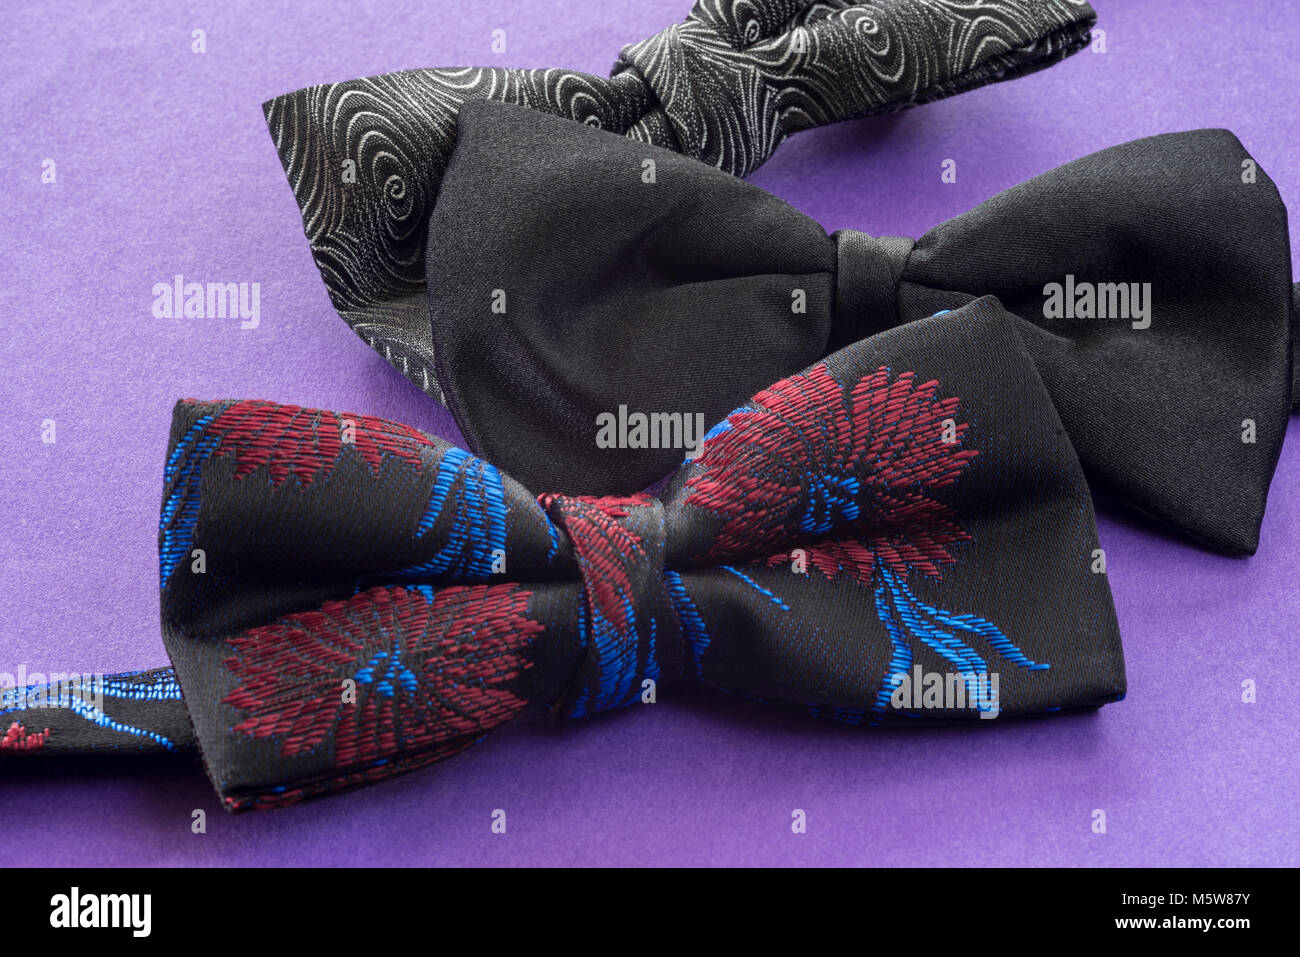 Three bow ties on apurple background. Stock Photo